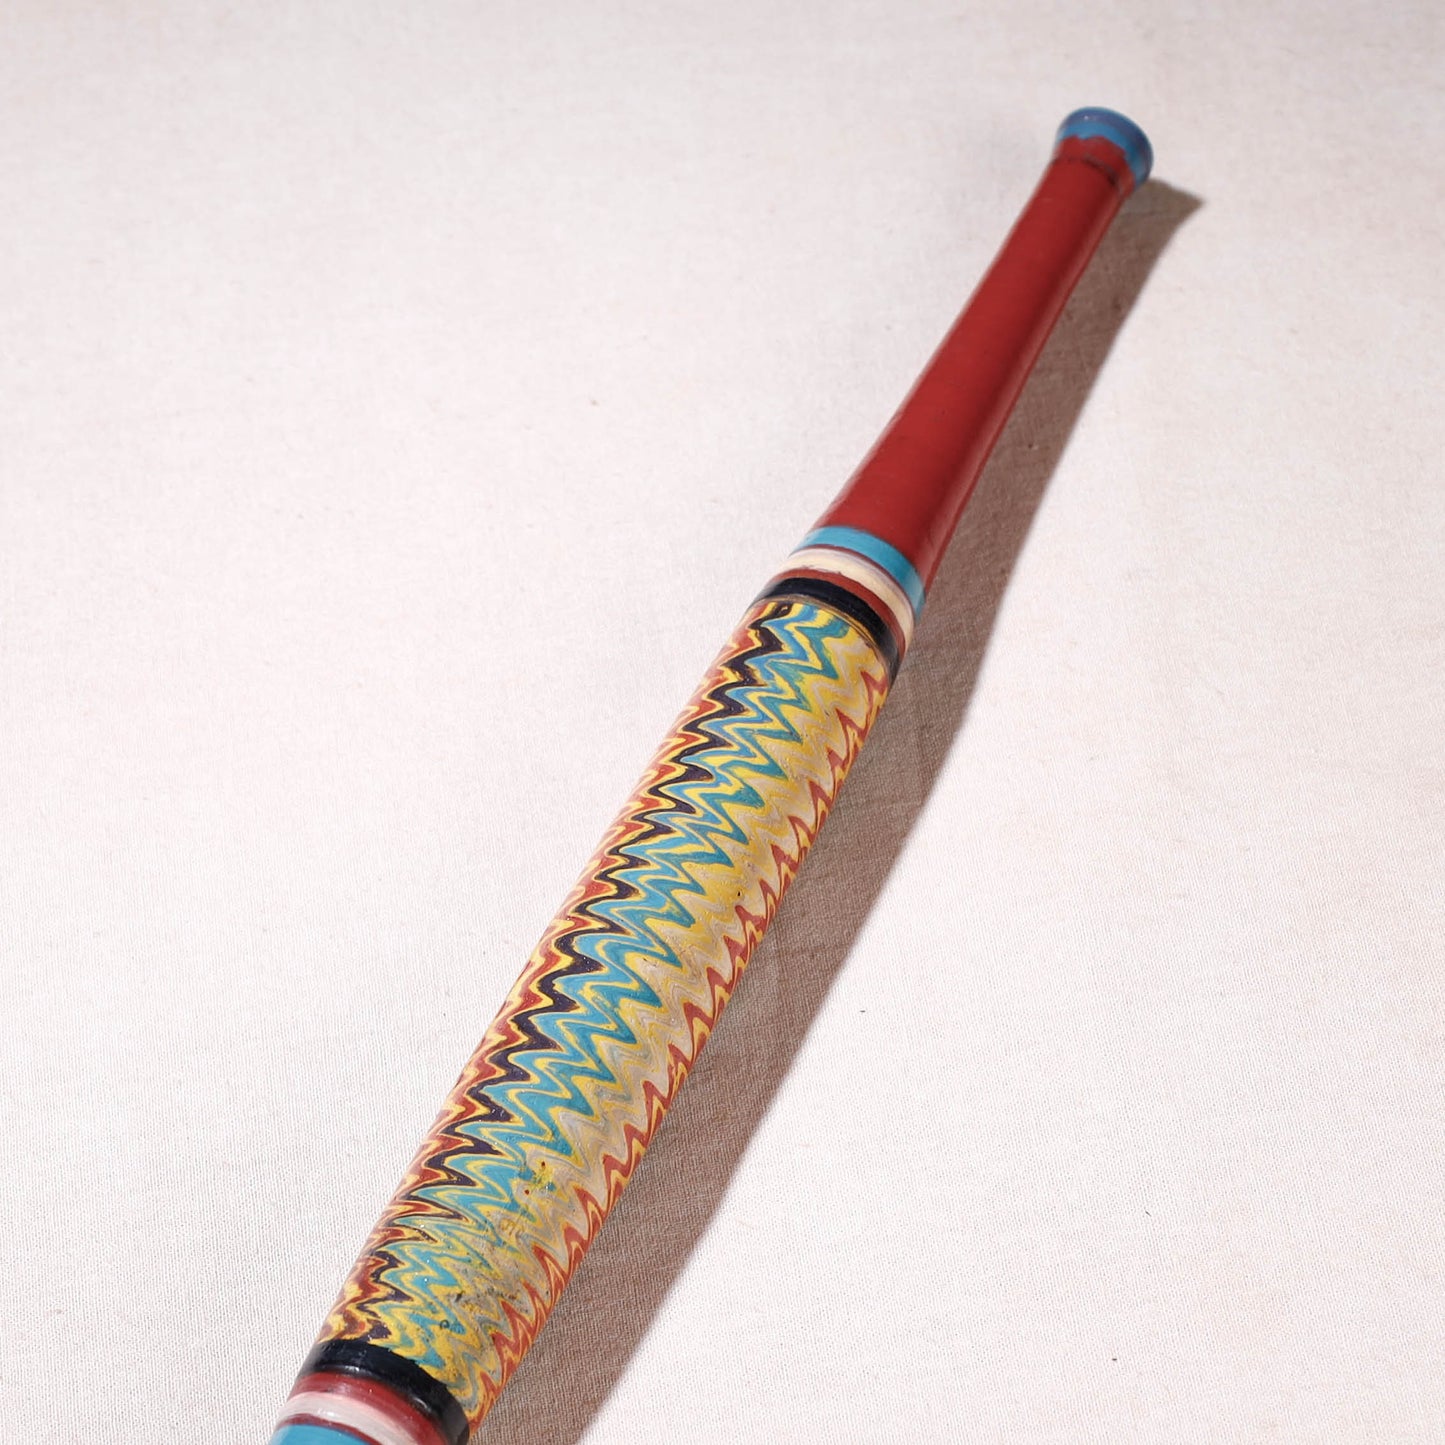 Handmade Lacquered Wooden Belan/बेलन (Chapatti Roller, Rolling Pin)